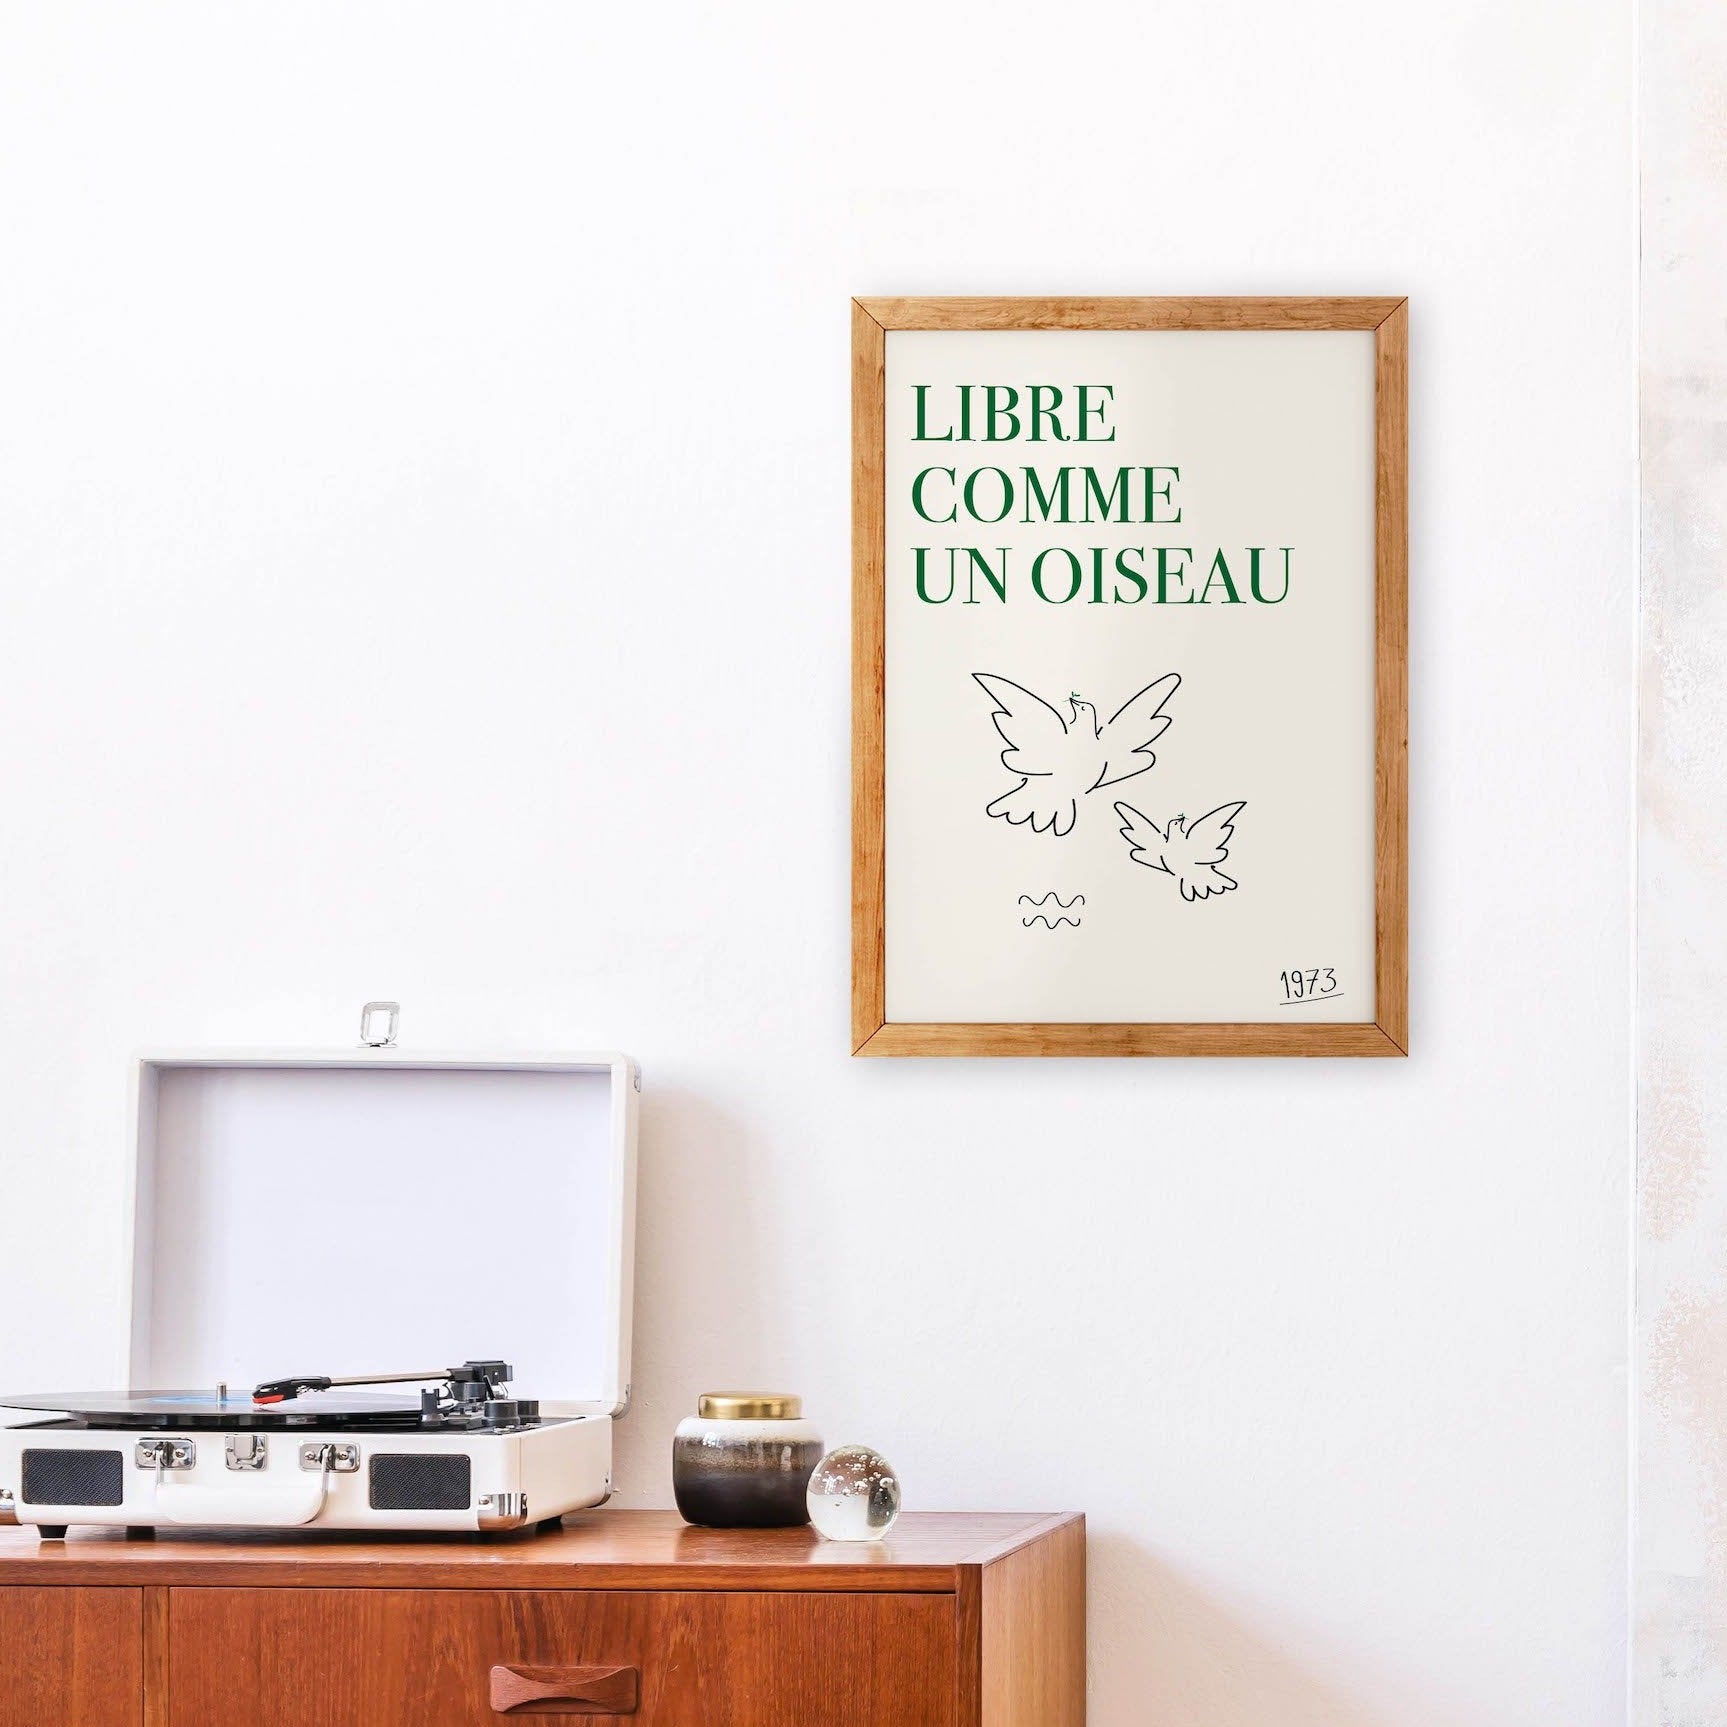 Libre comme un oiseau (Free as a bird) French Giclée retro Art Print